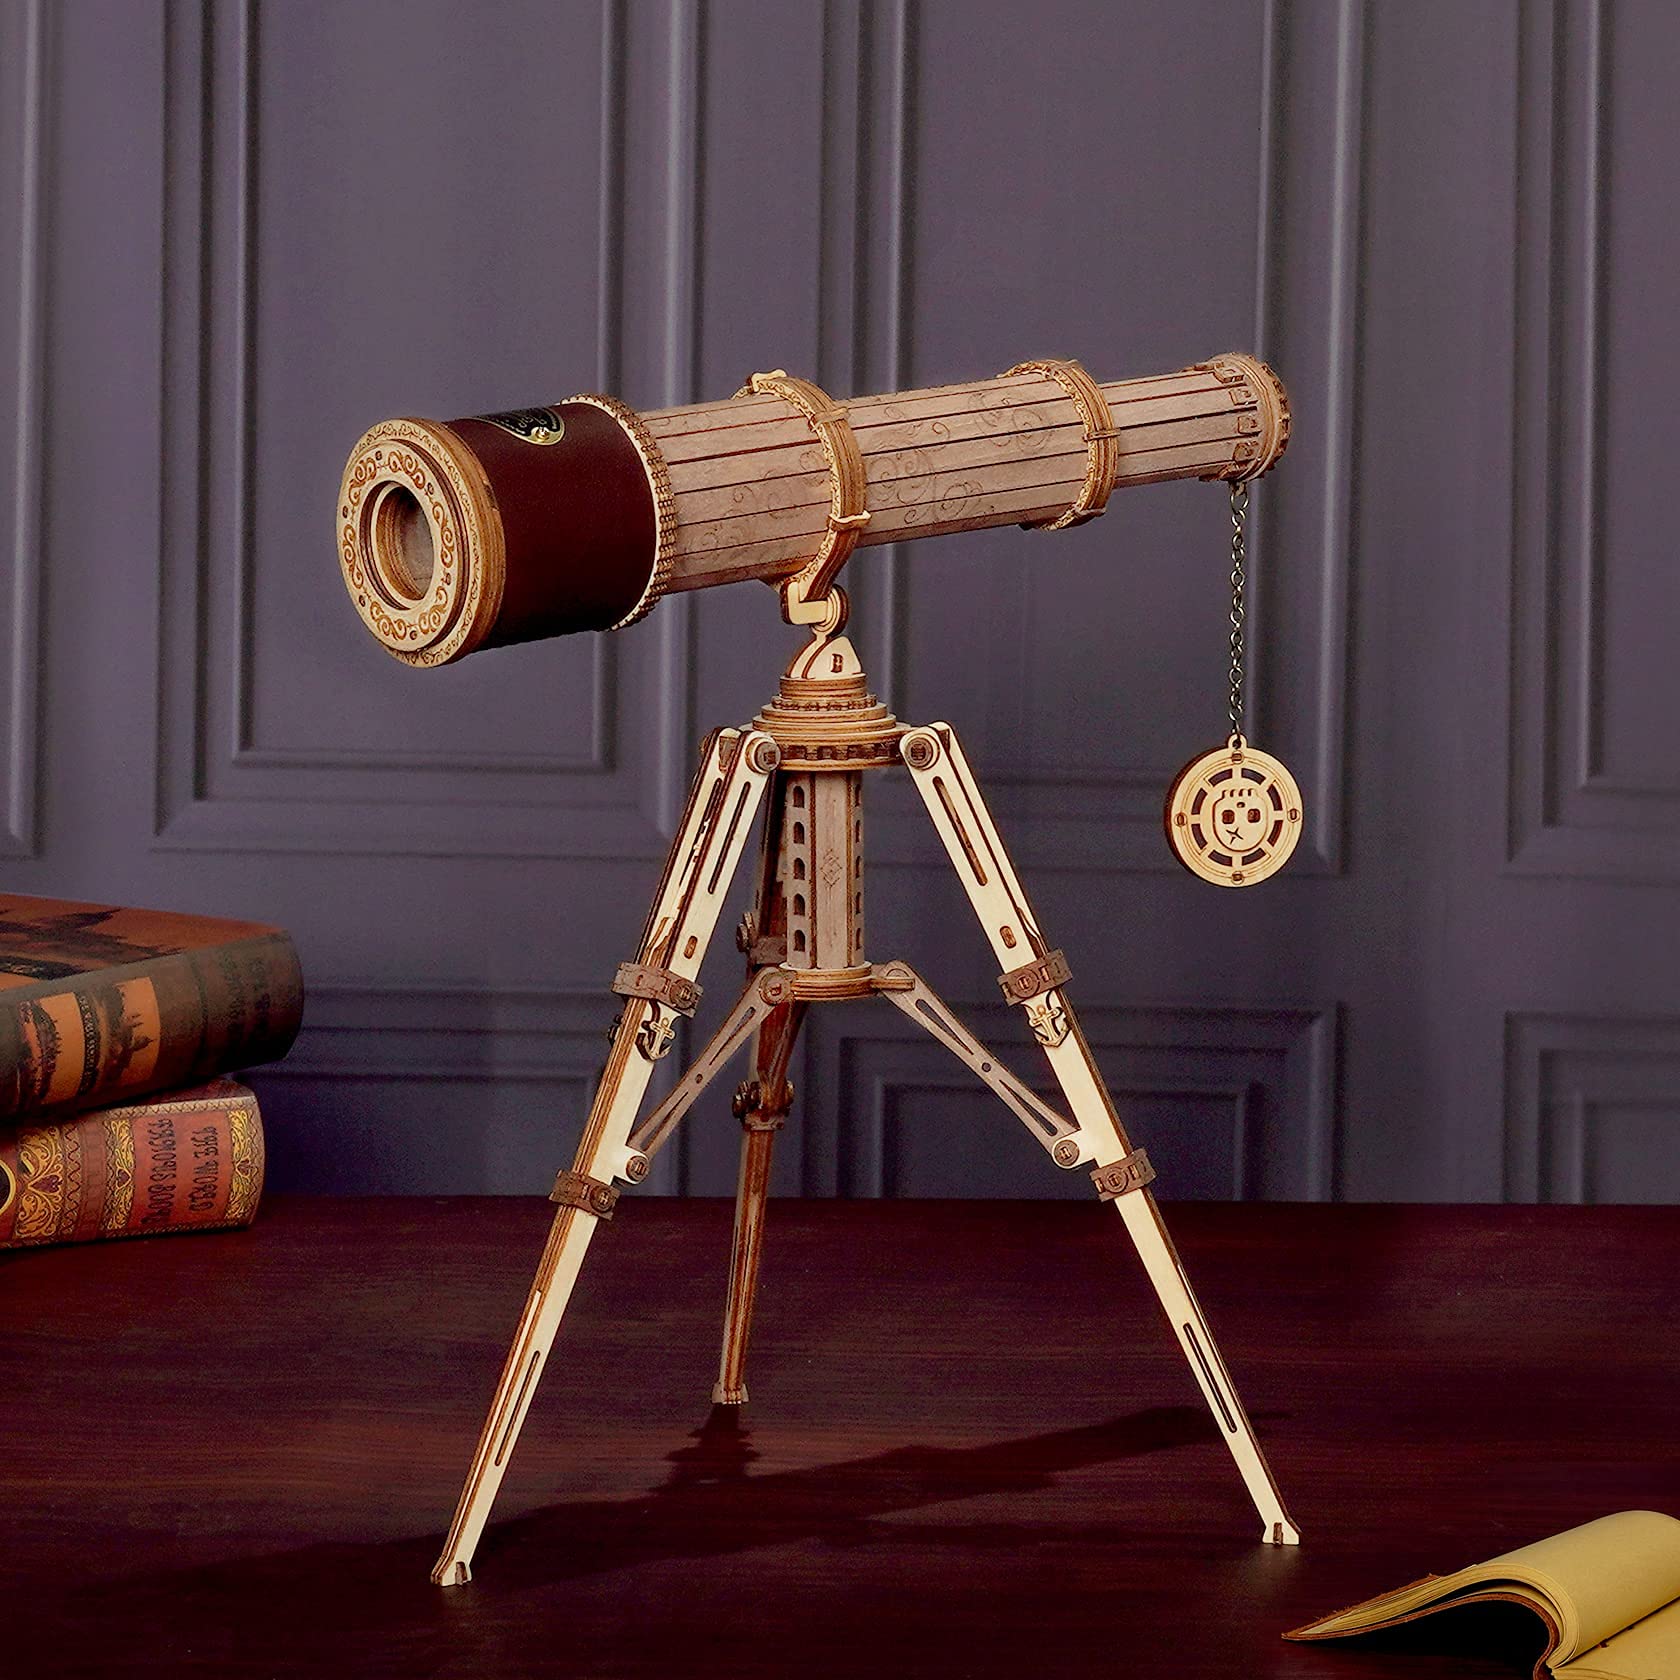 Retro 3D Wooden Telescope Puzzle Kit